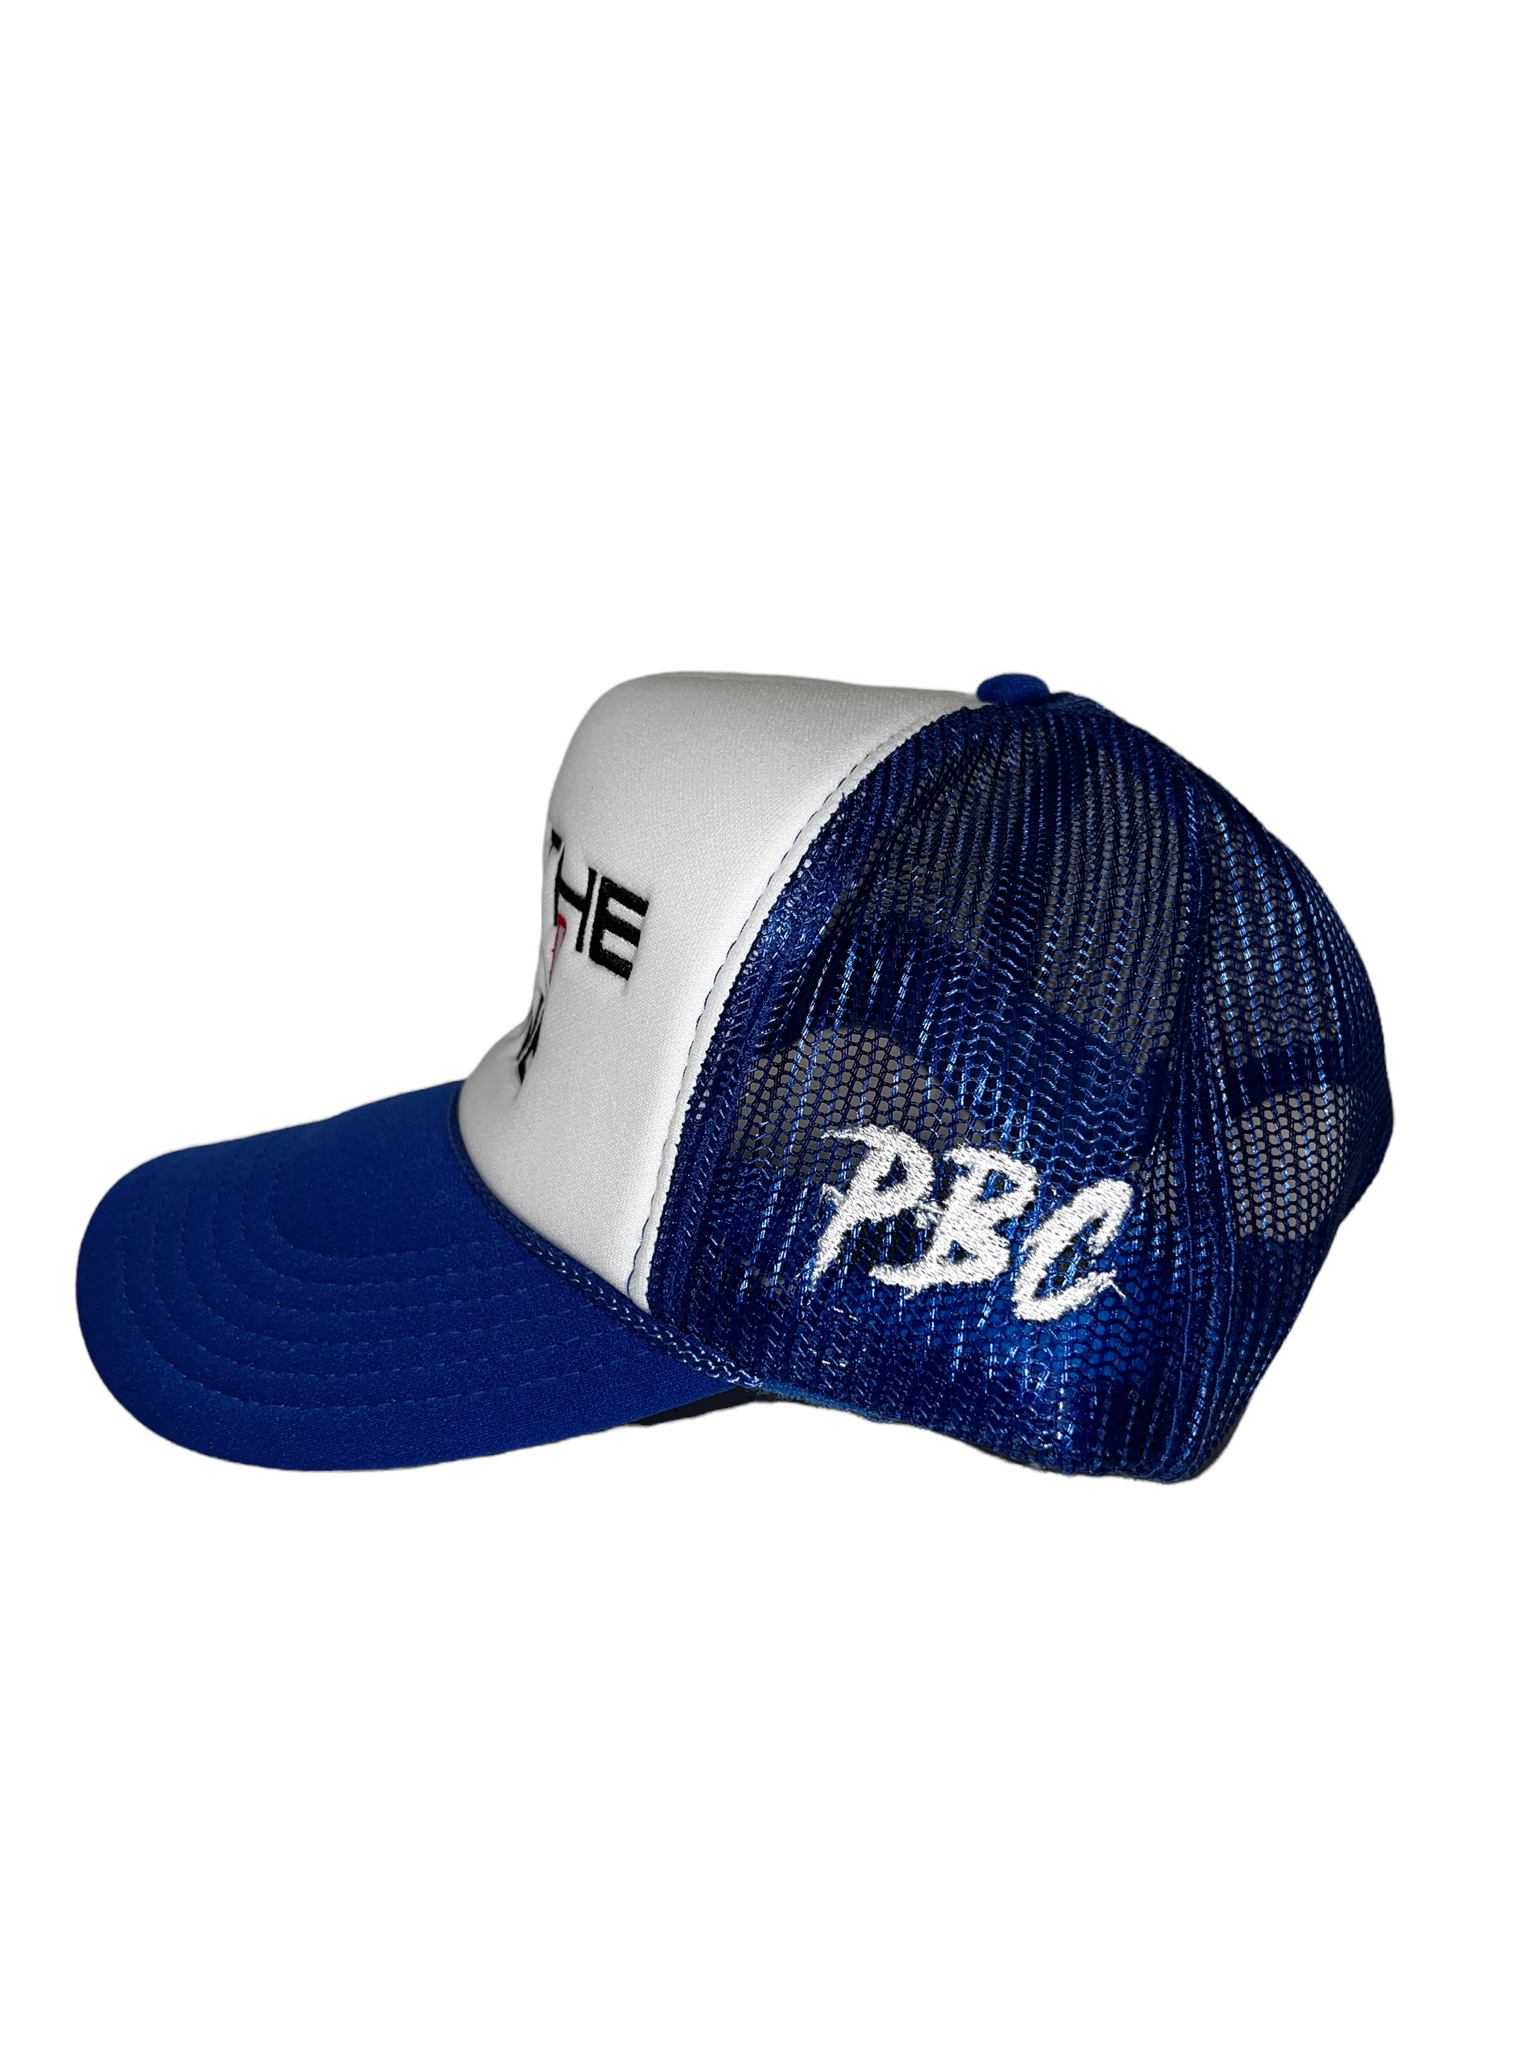 STT Blue/White Trucker Hat